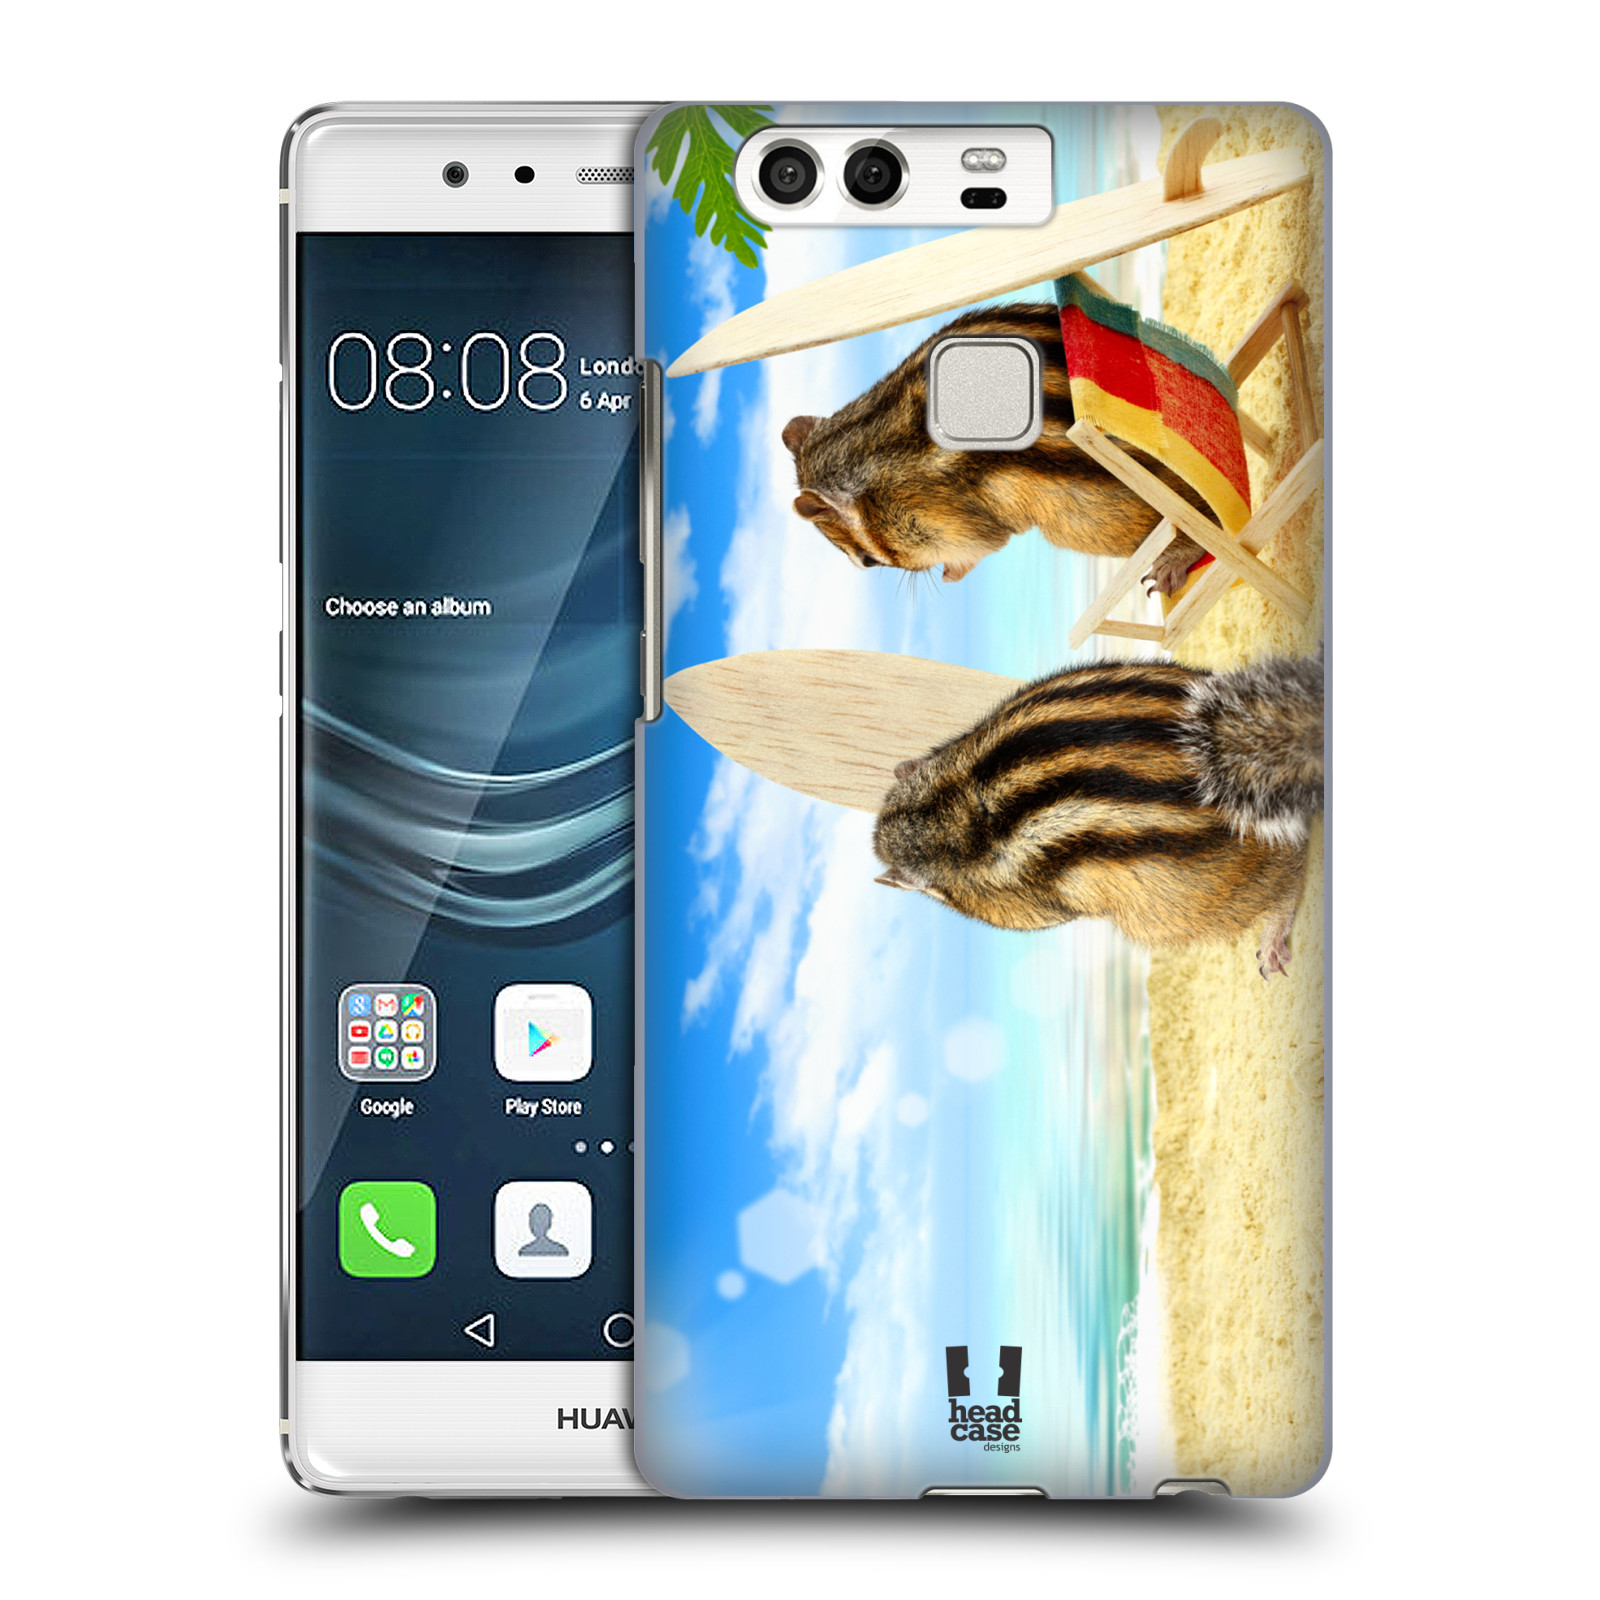 HEAD CASE plastový obal na mobil Huawei P9 / P9 DUAL SIM vzor Legrační zvířátka veverky surfaři u moře